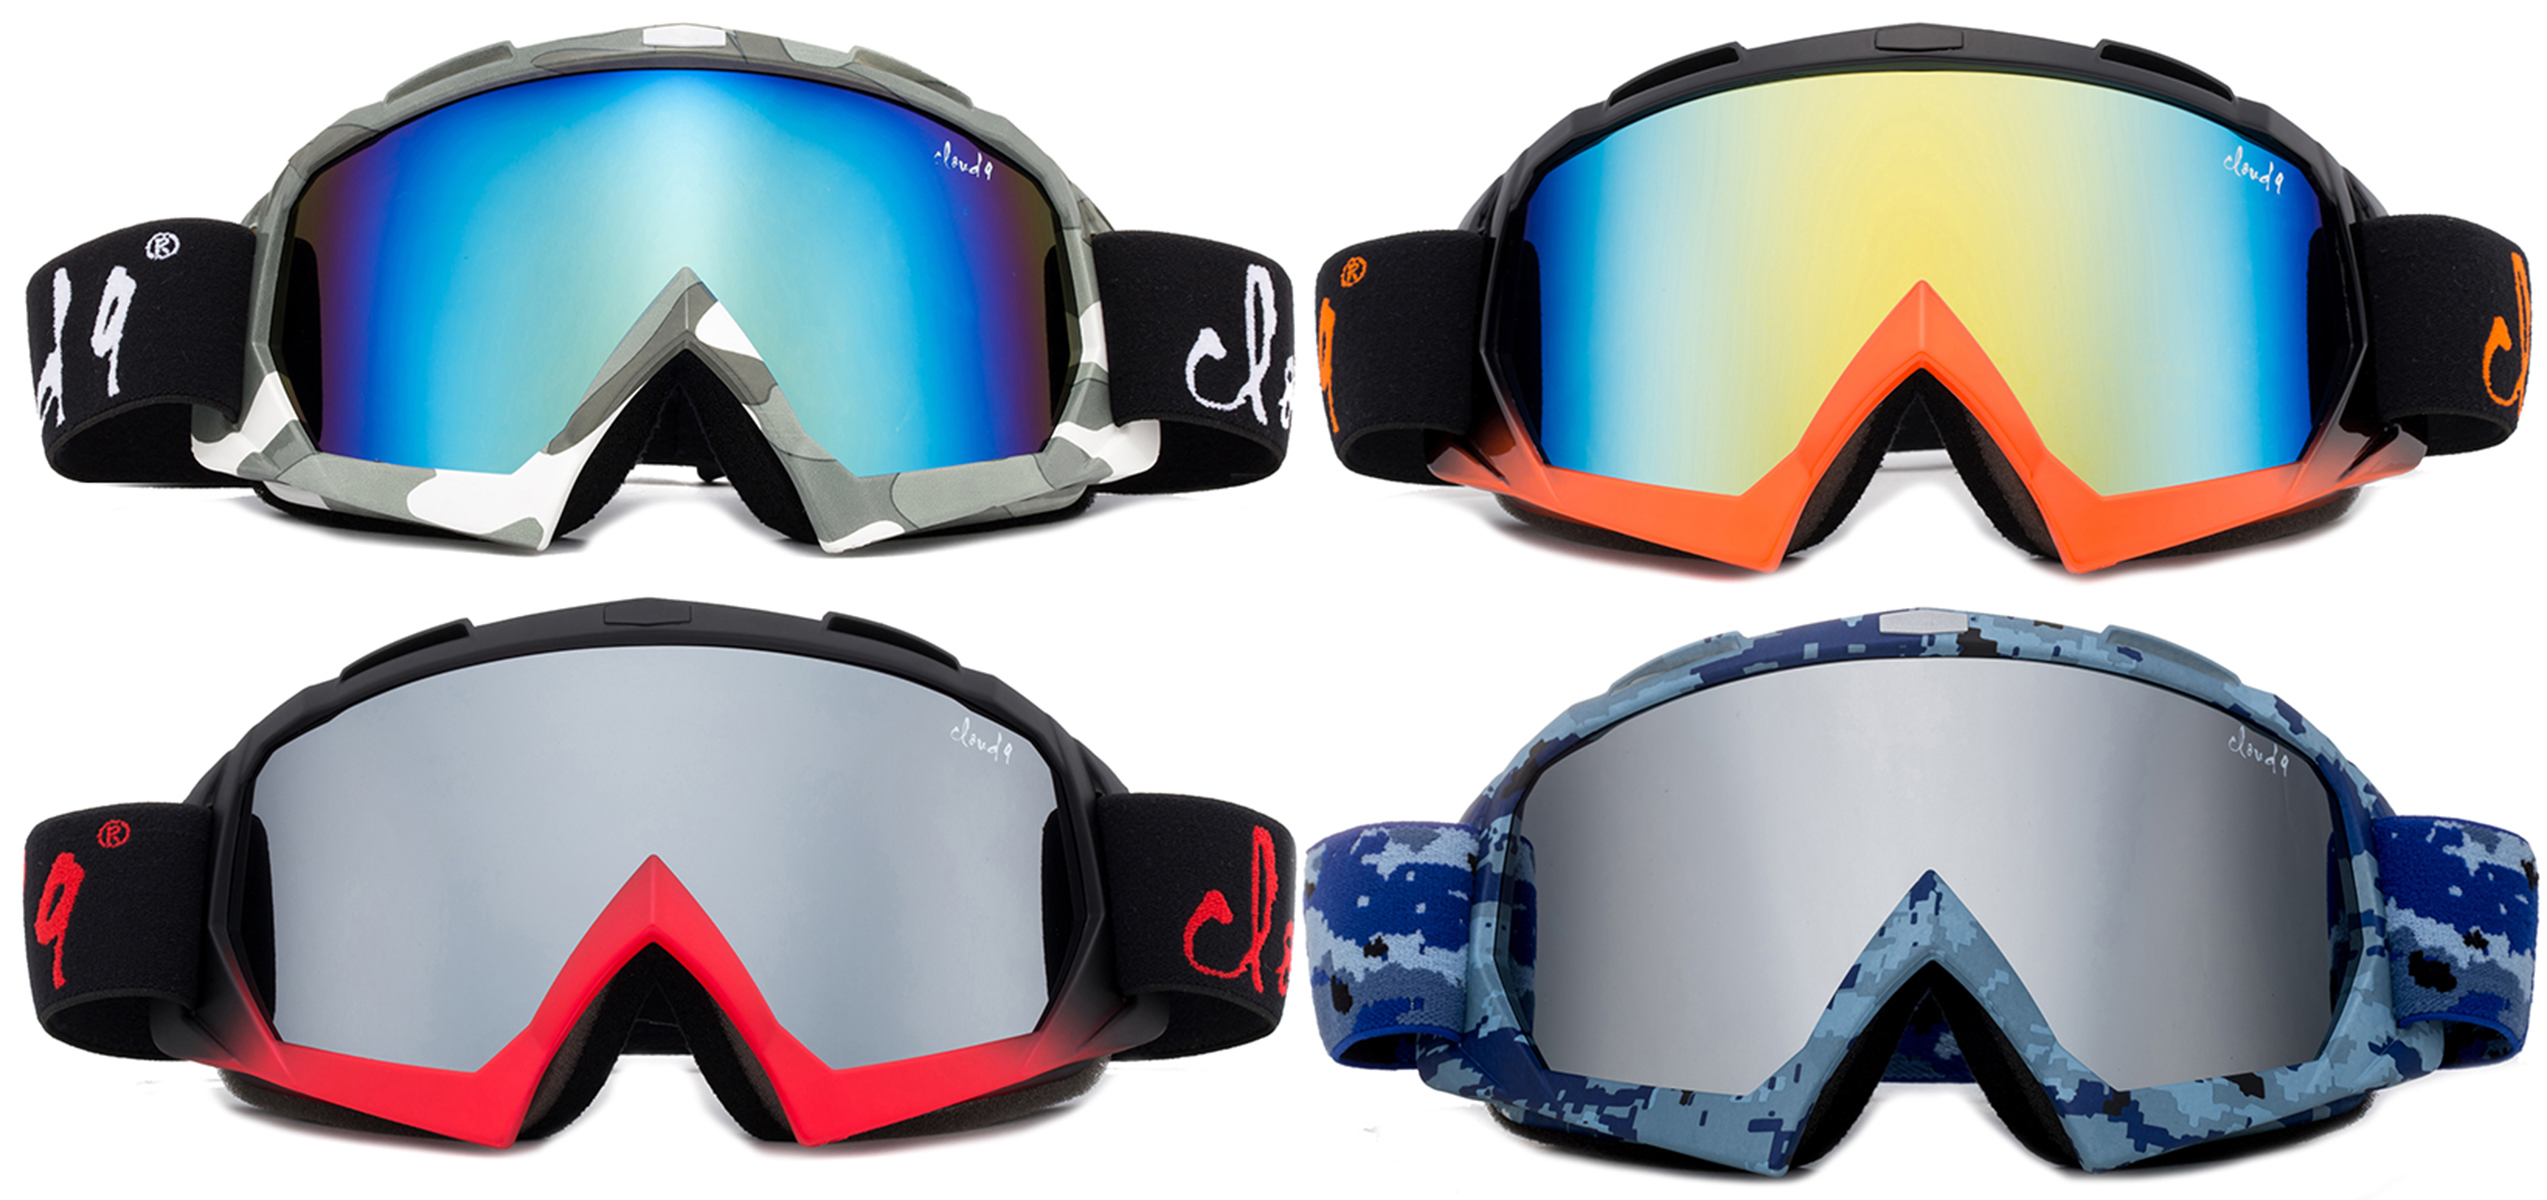 Cloud 9 - Snow Goggles "Gorilla" Adult Camo Anti-Fog Dual Lens UV400 Snowboarding Ski - image 1 of 4